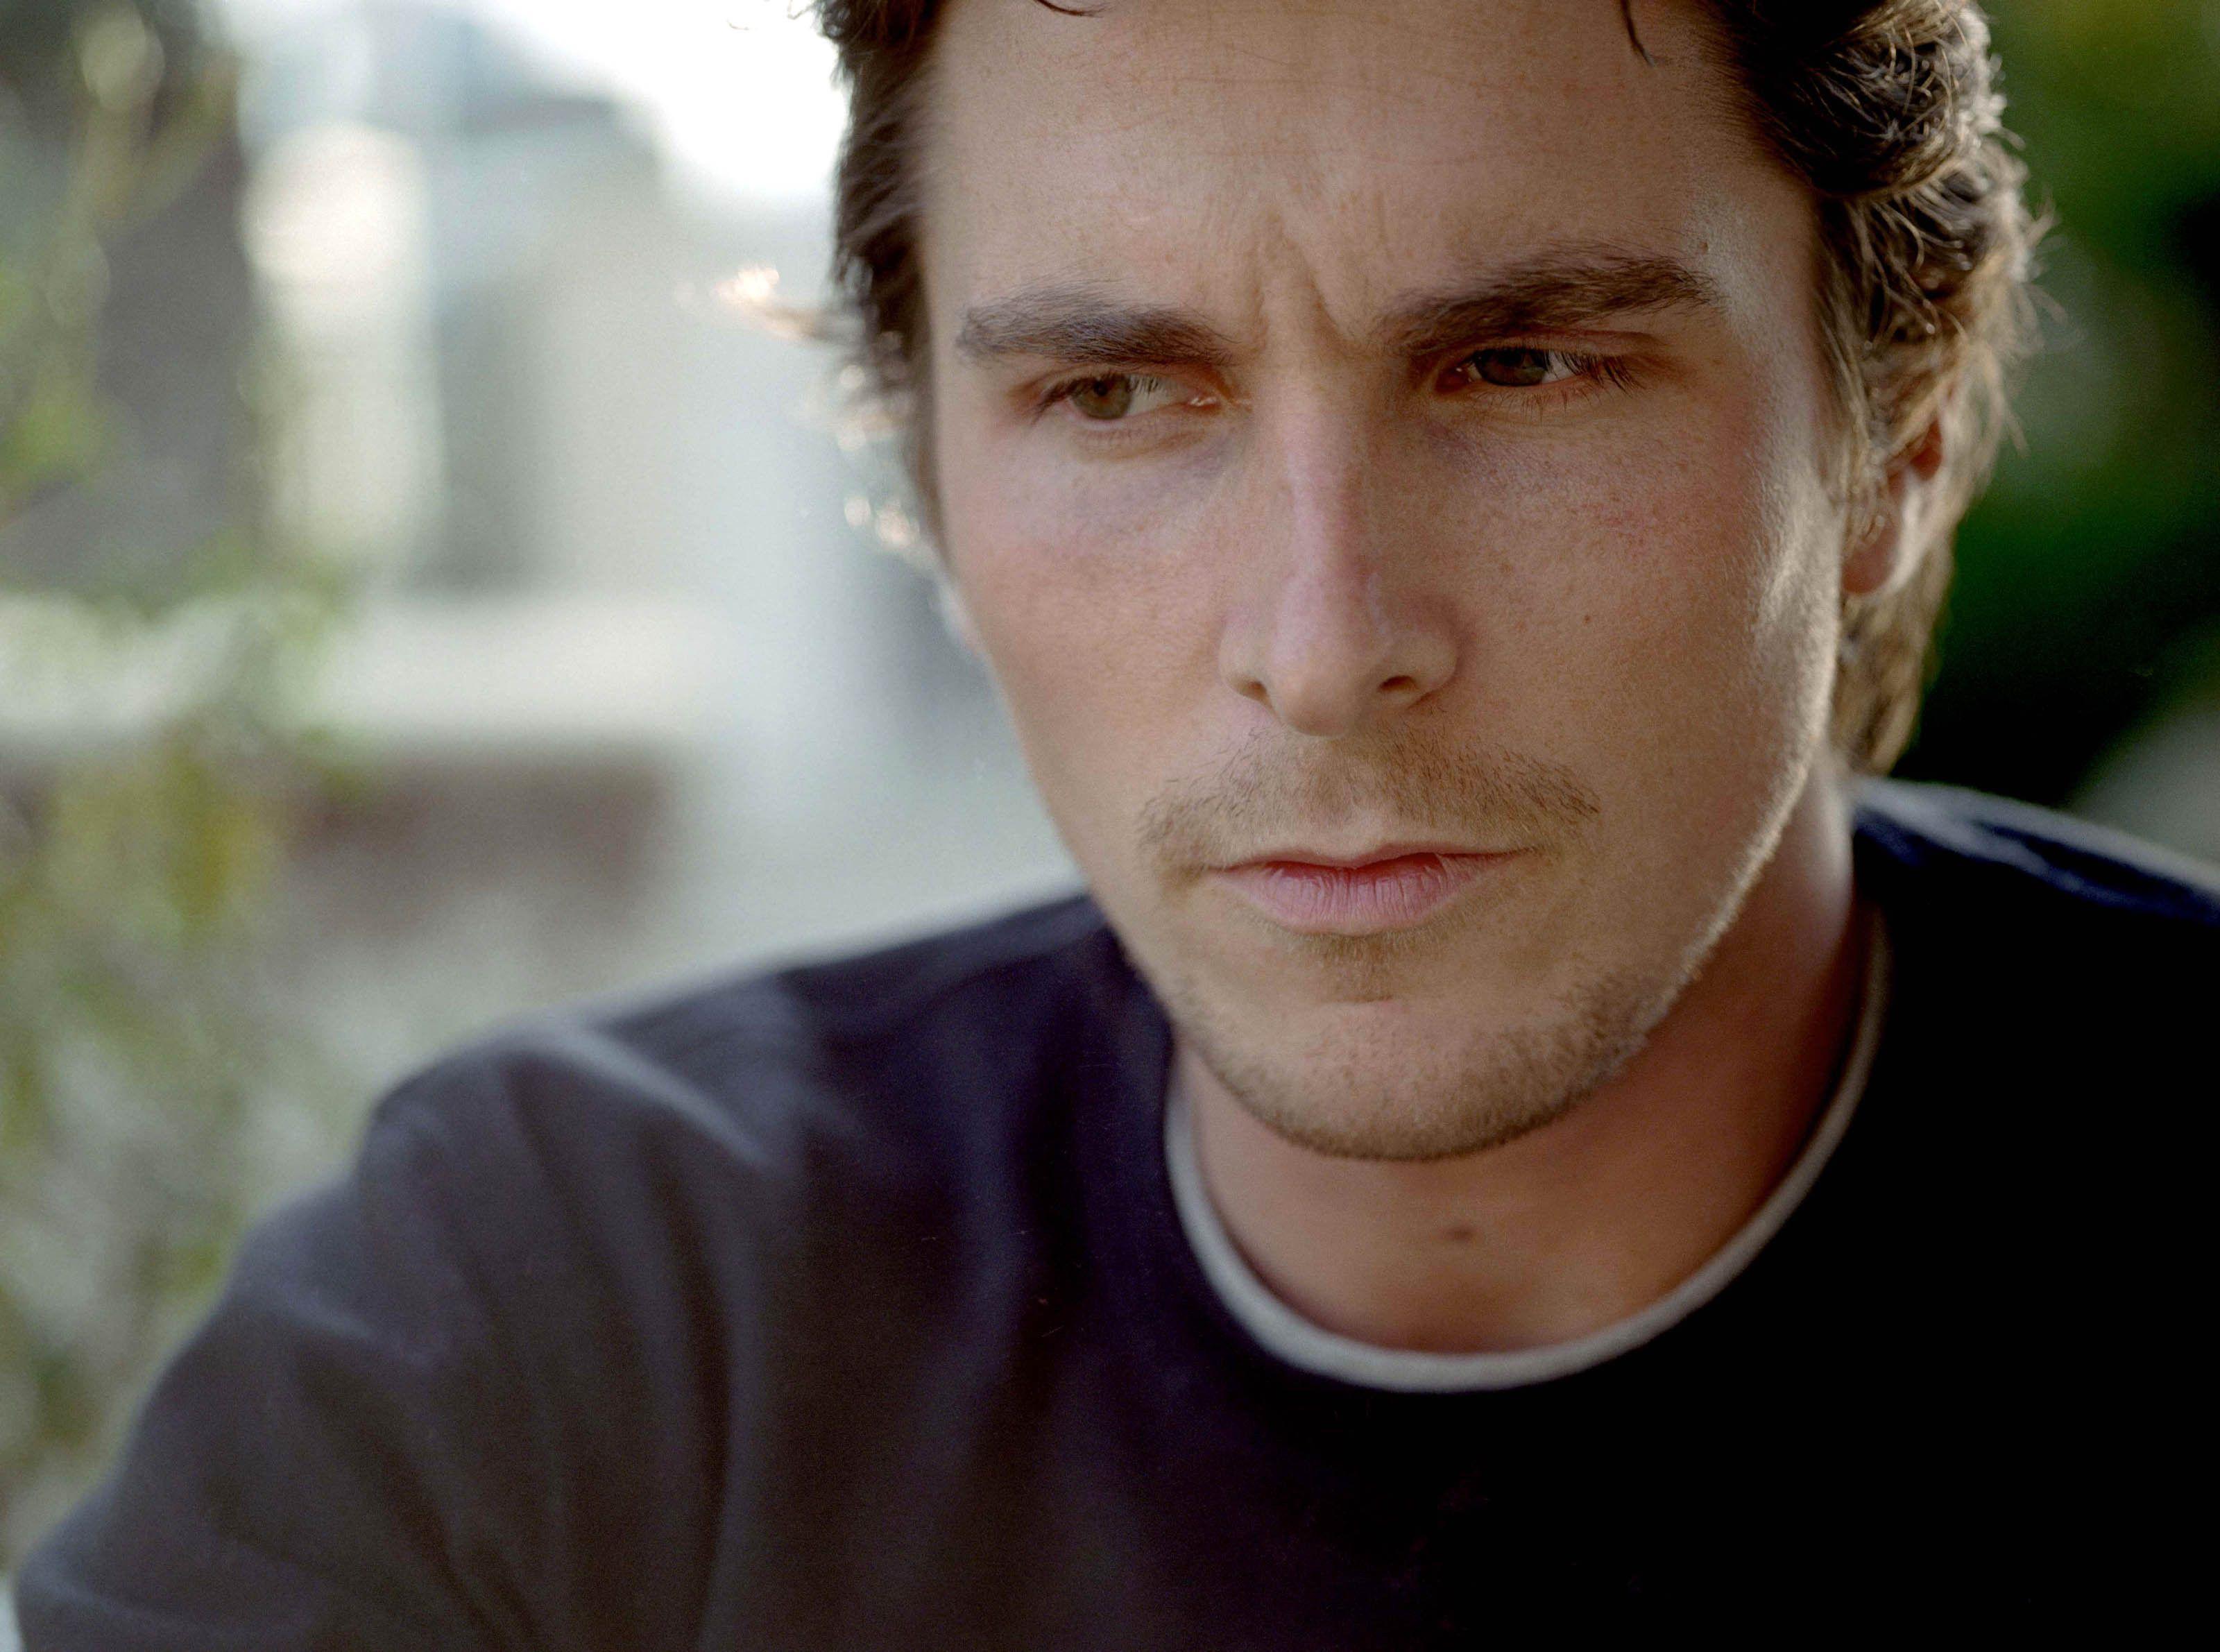 Christian Bale Wallpaper